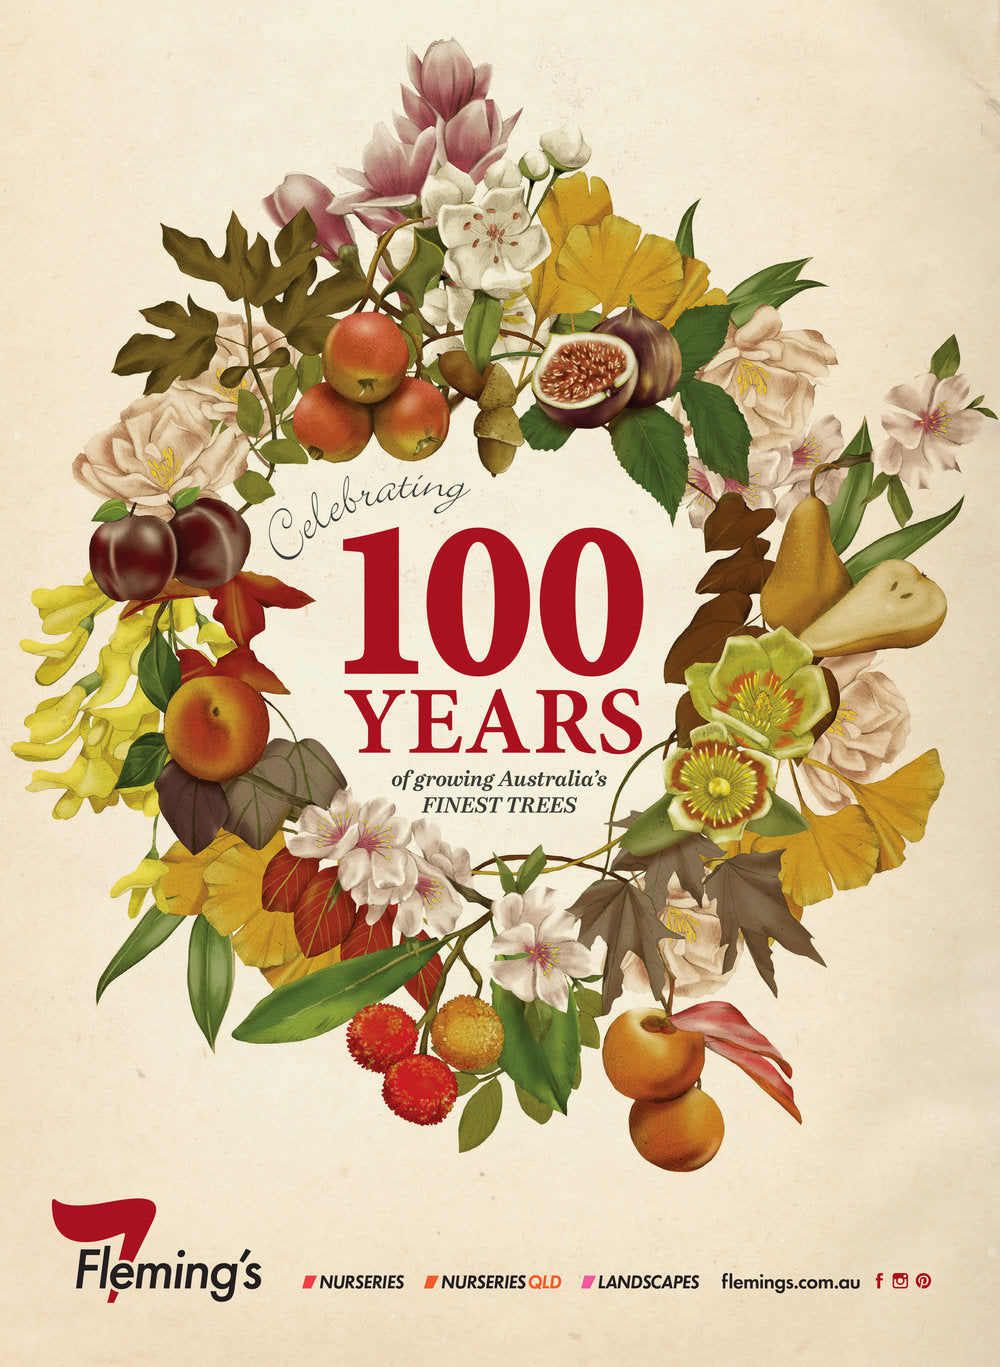 Fleming's Nursery 100 Year Anniversary wreath botanical illustration advertising by Melbourne based illustrator Kelly Thompson